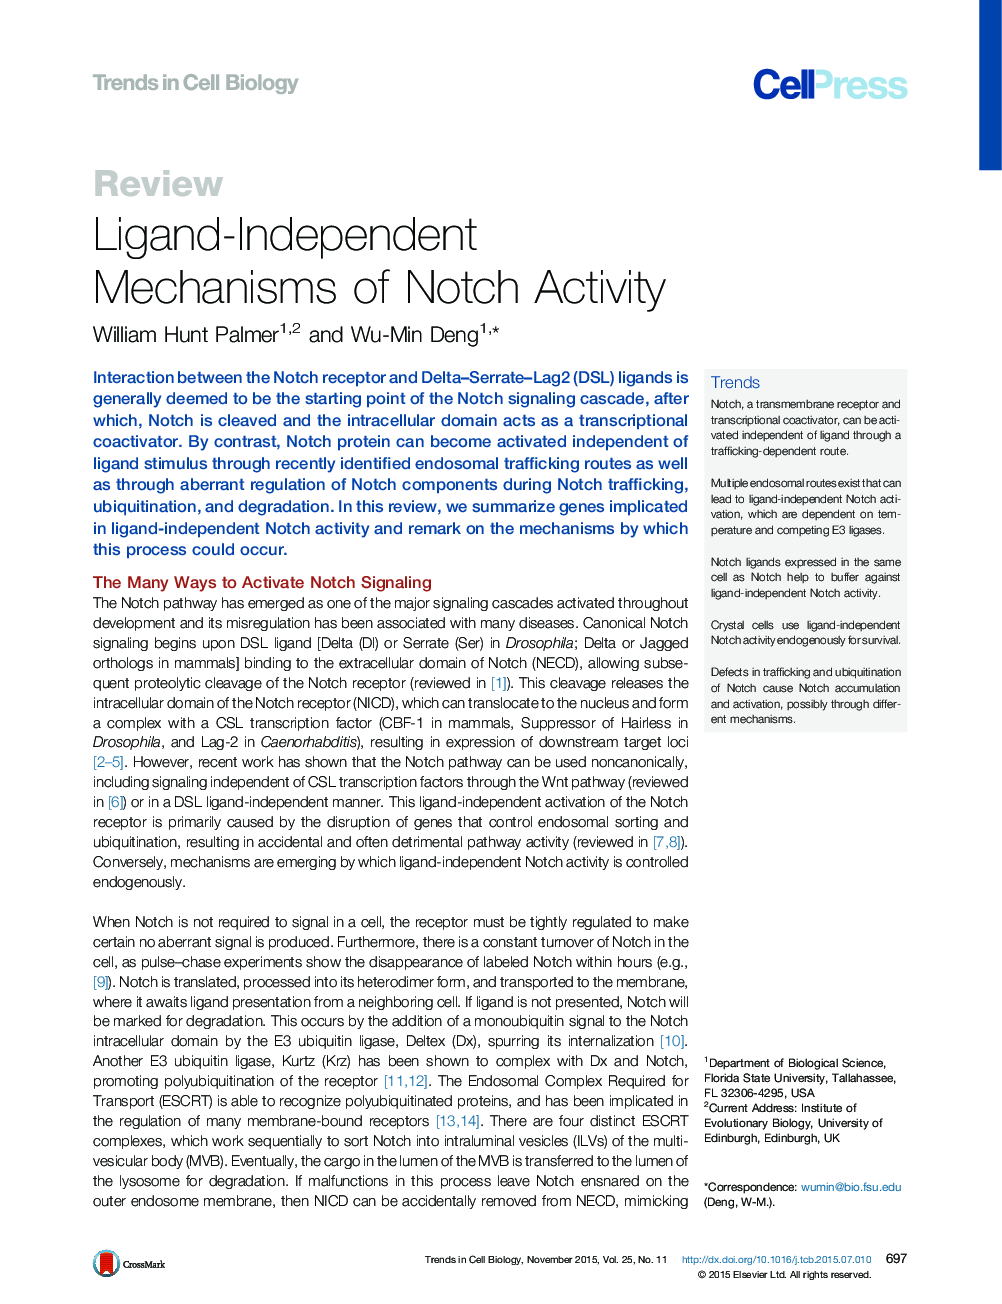 Ligand-Independent Mechanisms of Notch Activity